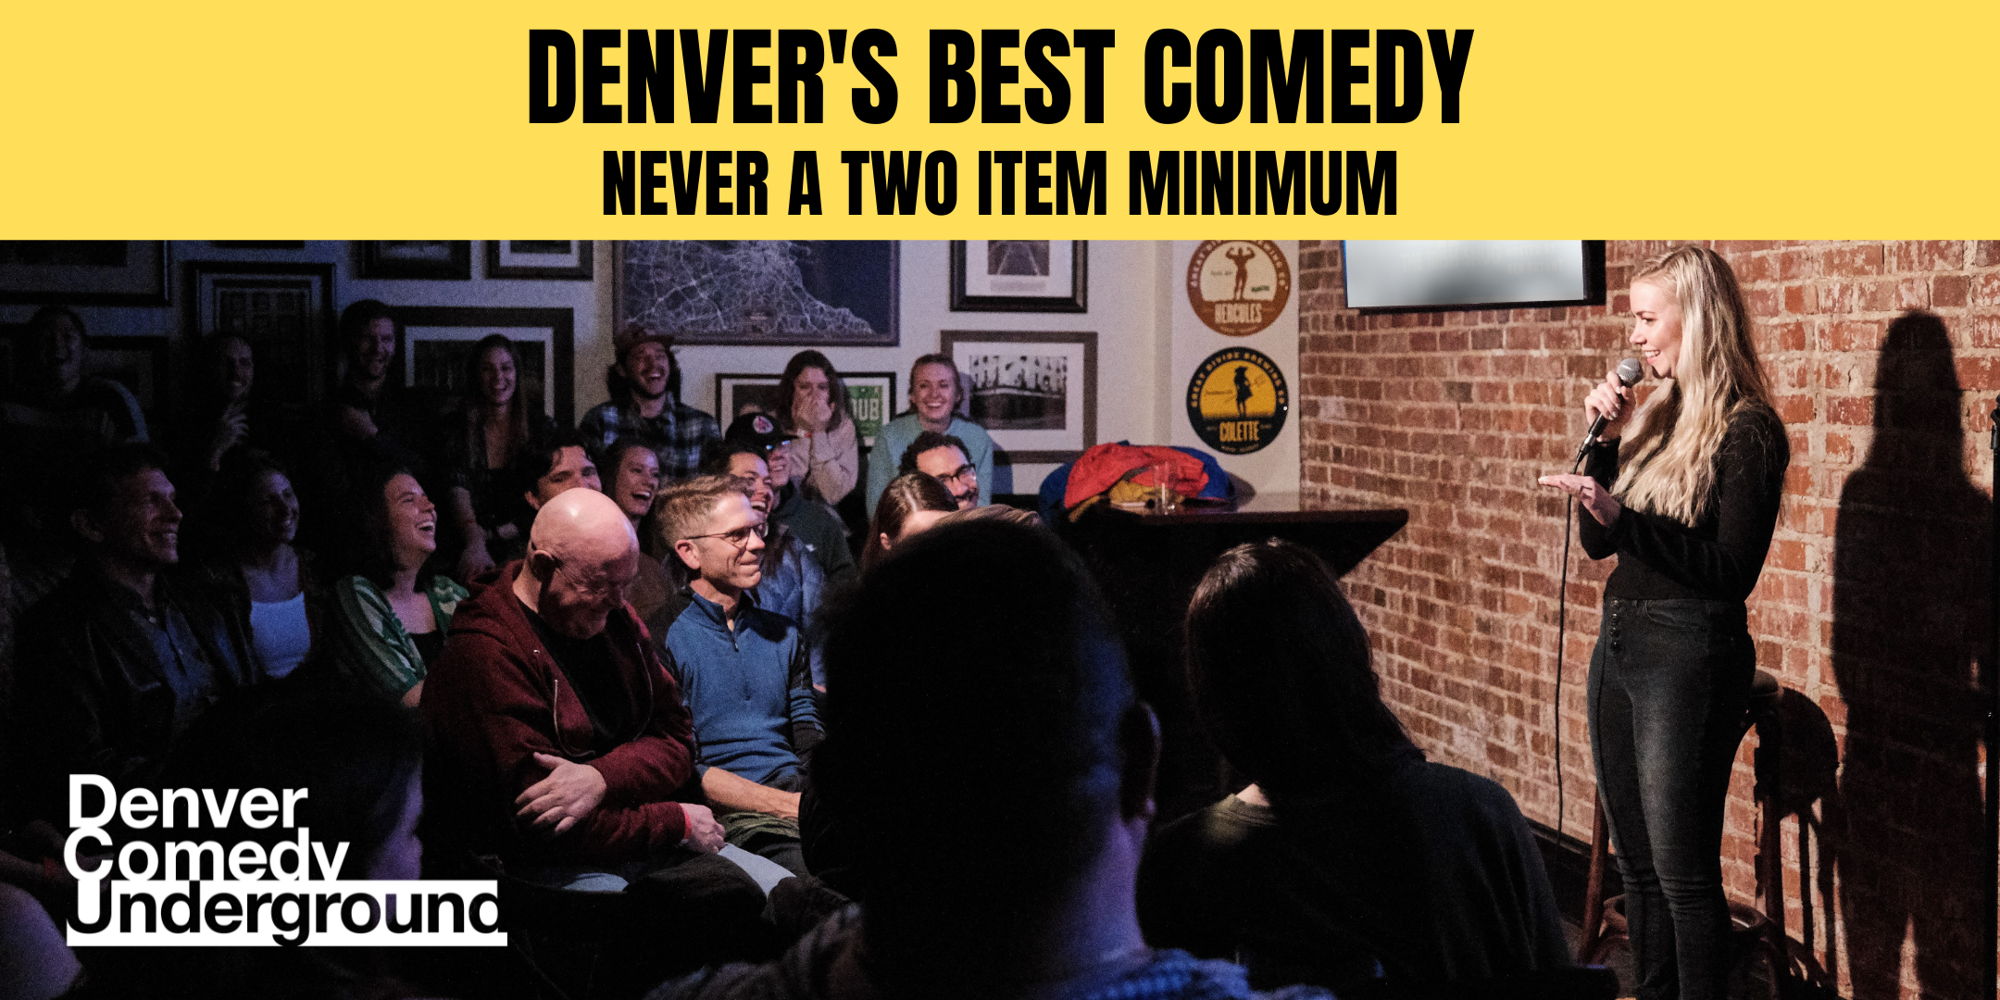 Denver Comedy Underground Stand Up promotional image